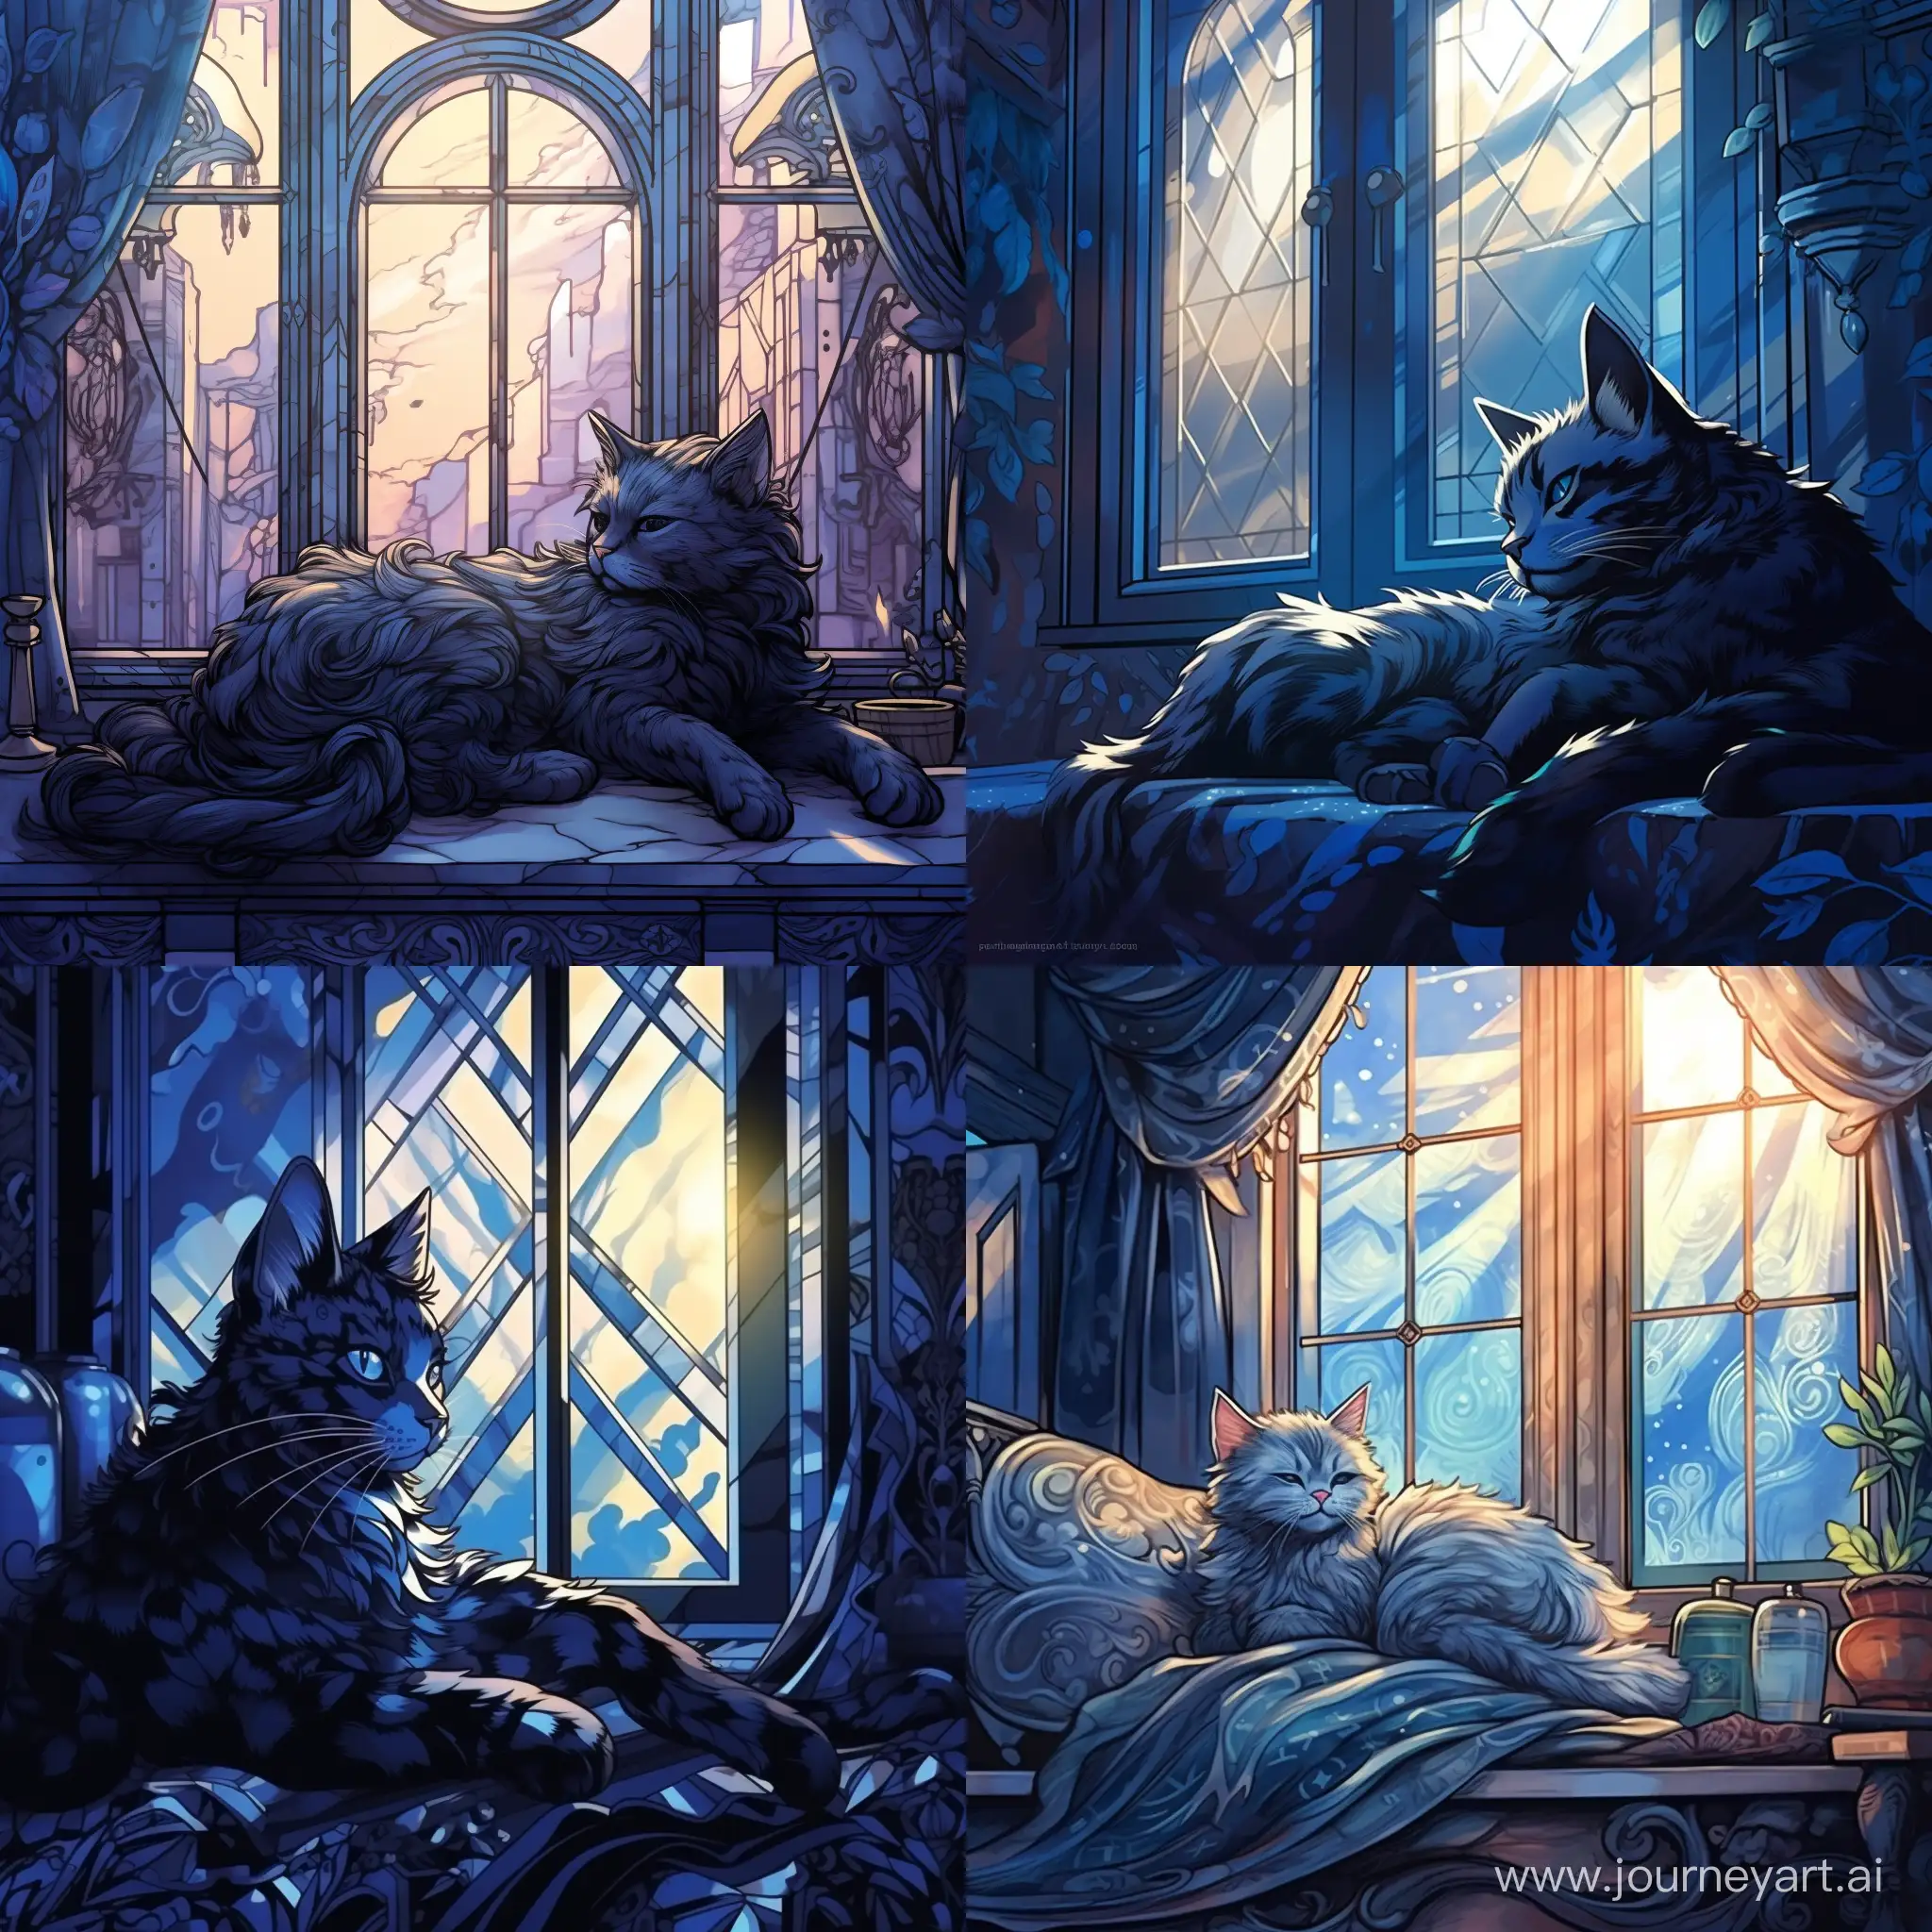 Blue-Patterned-Cat-Relaxing-by-Sunlit-Window